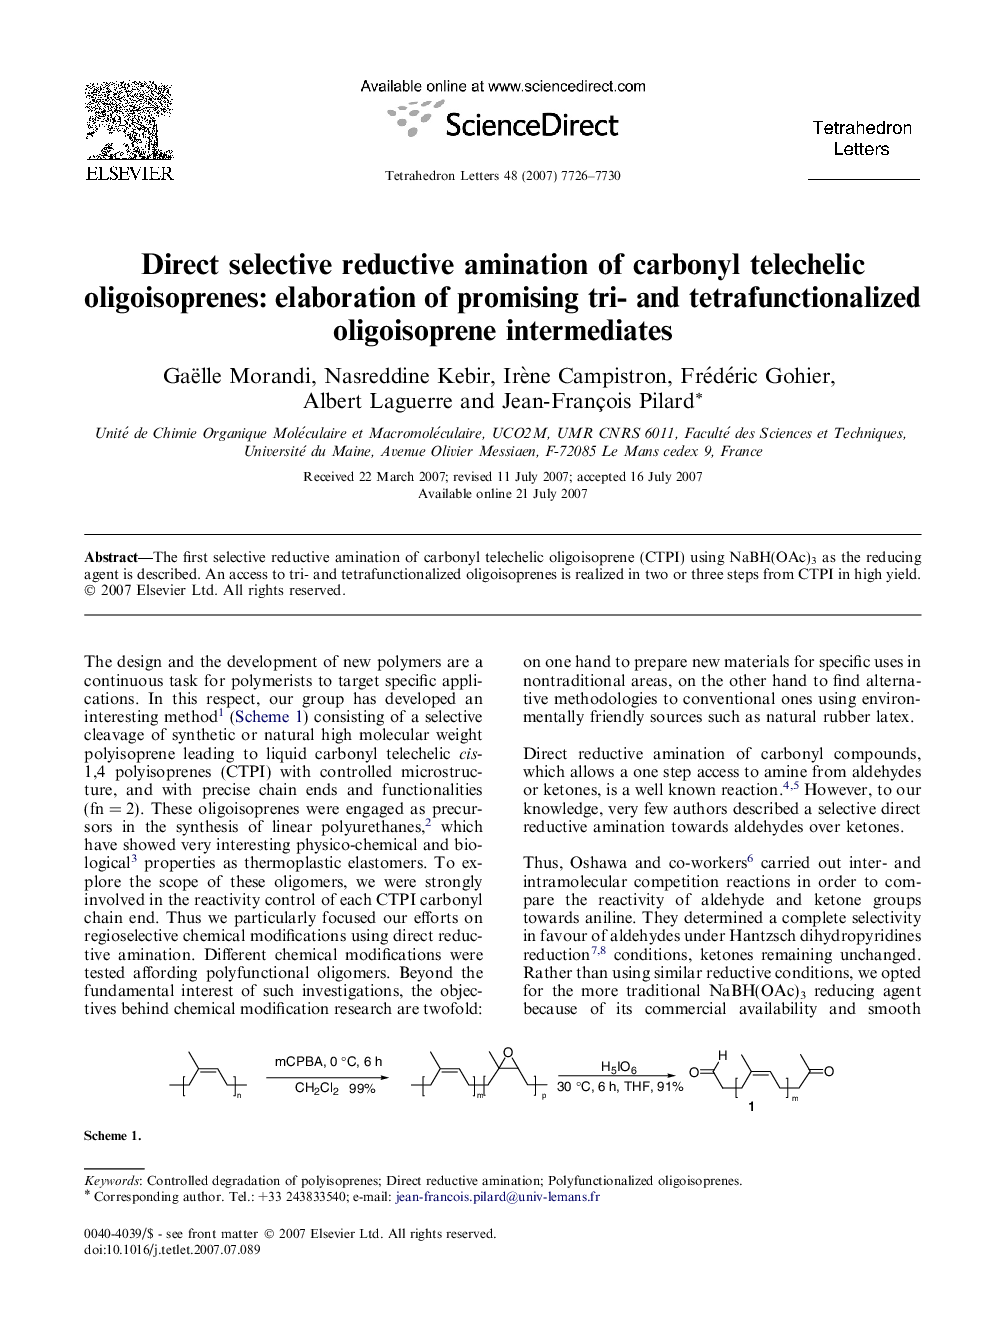 Direct selective reductive amination of carbonyl telechelic oligoisoprenes: elaboration of promising tri- and tetrafunctionalized oligoisoprene intermediates